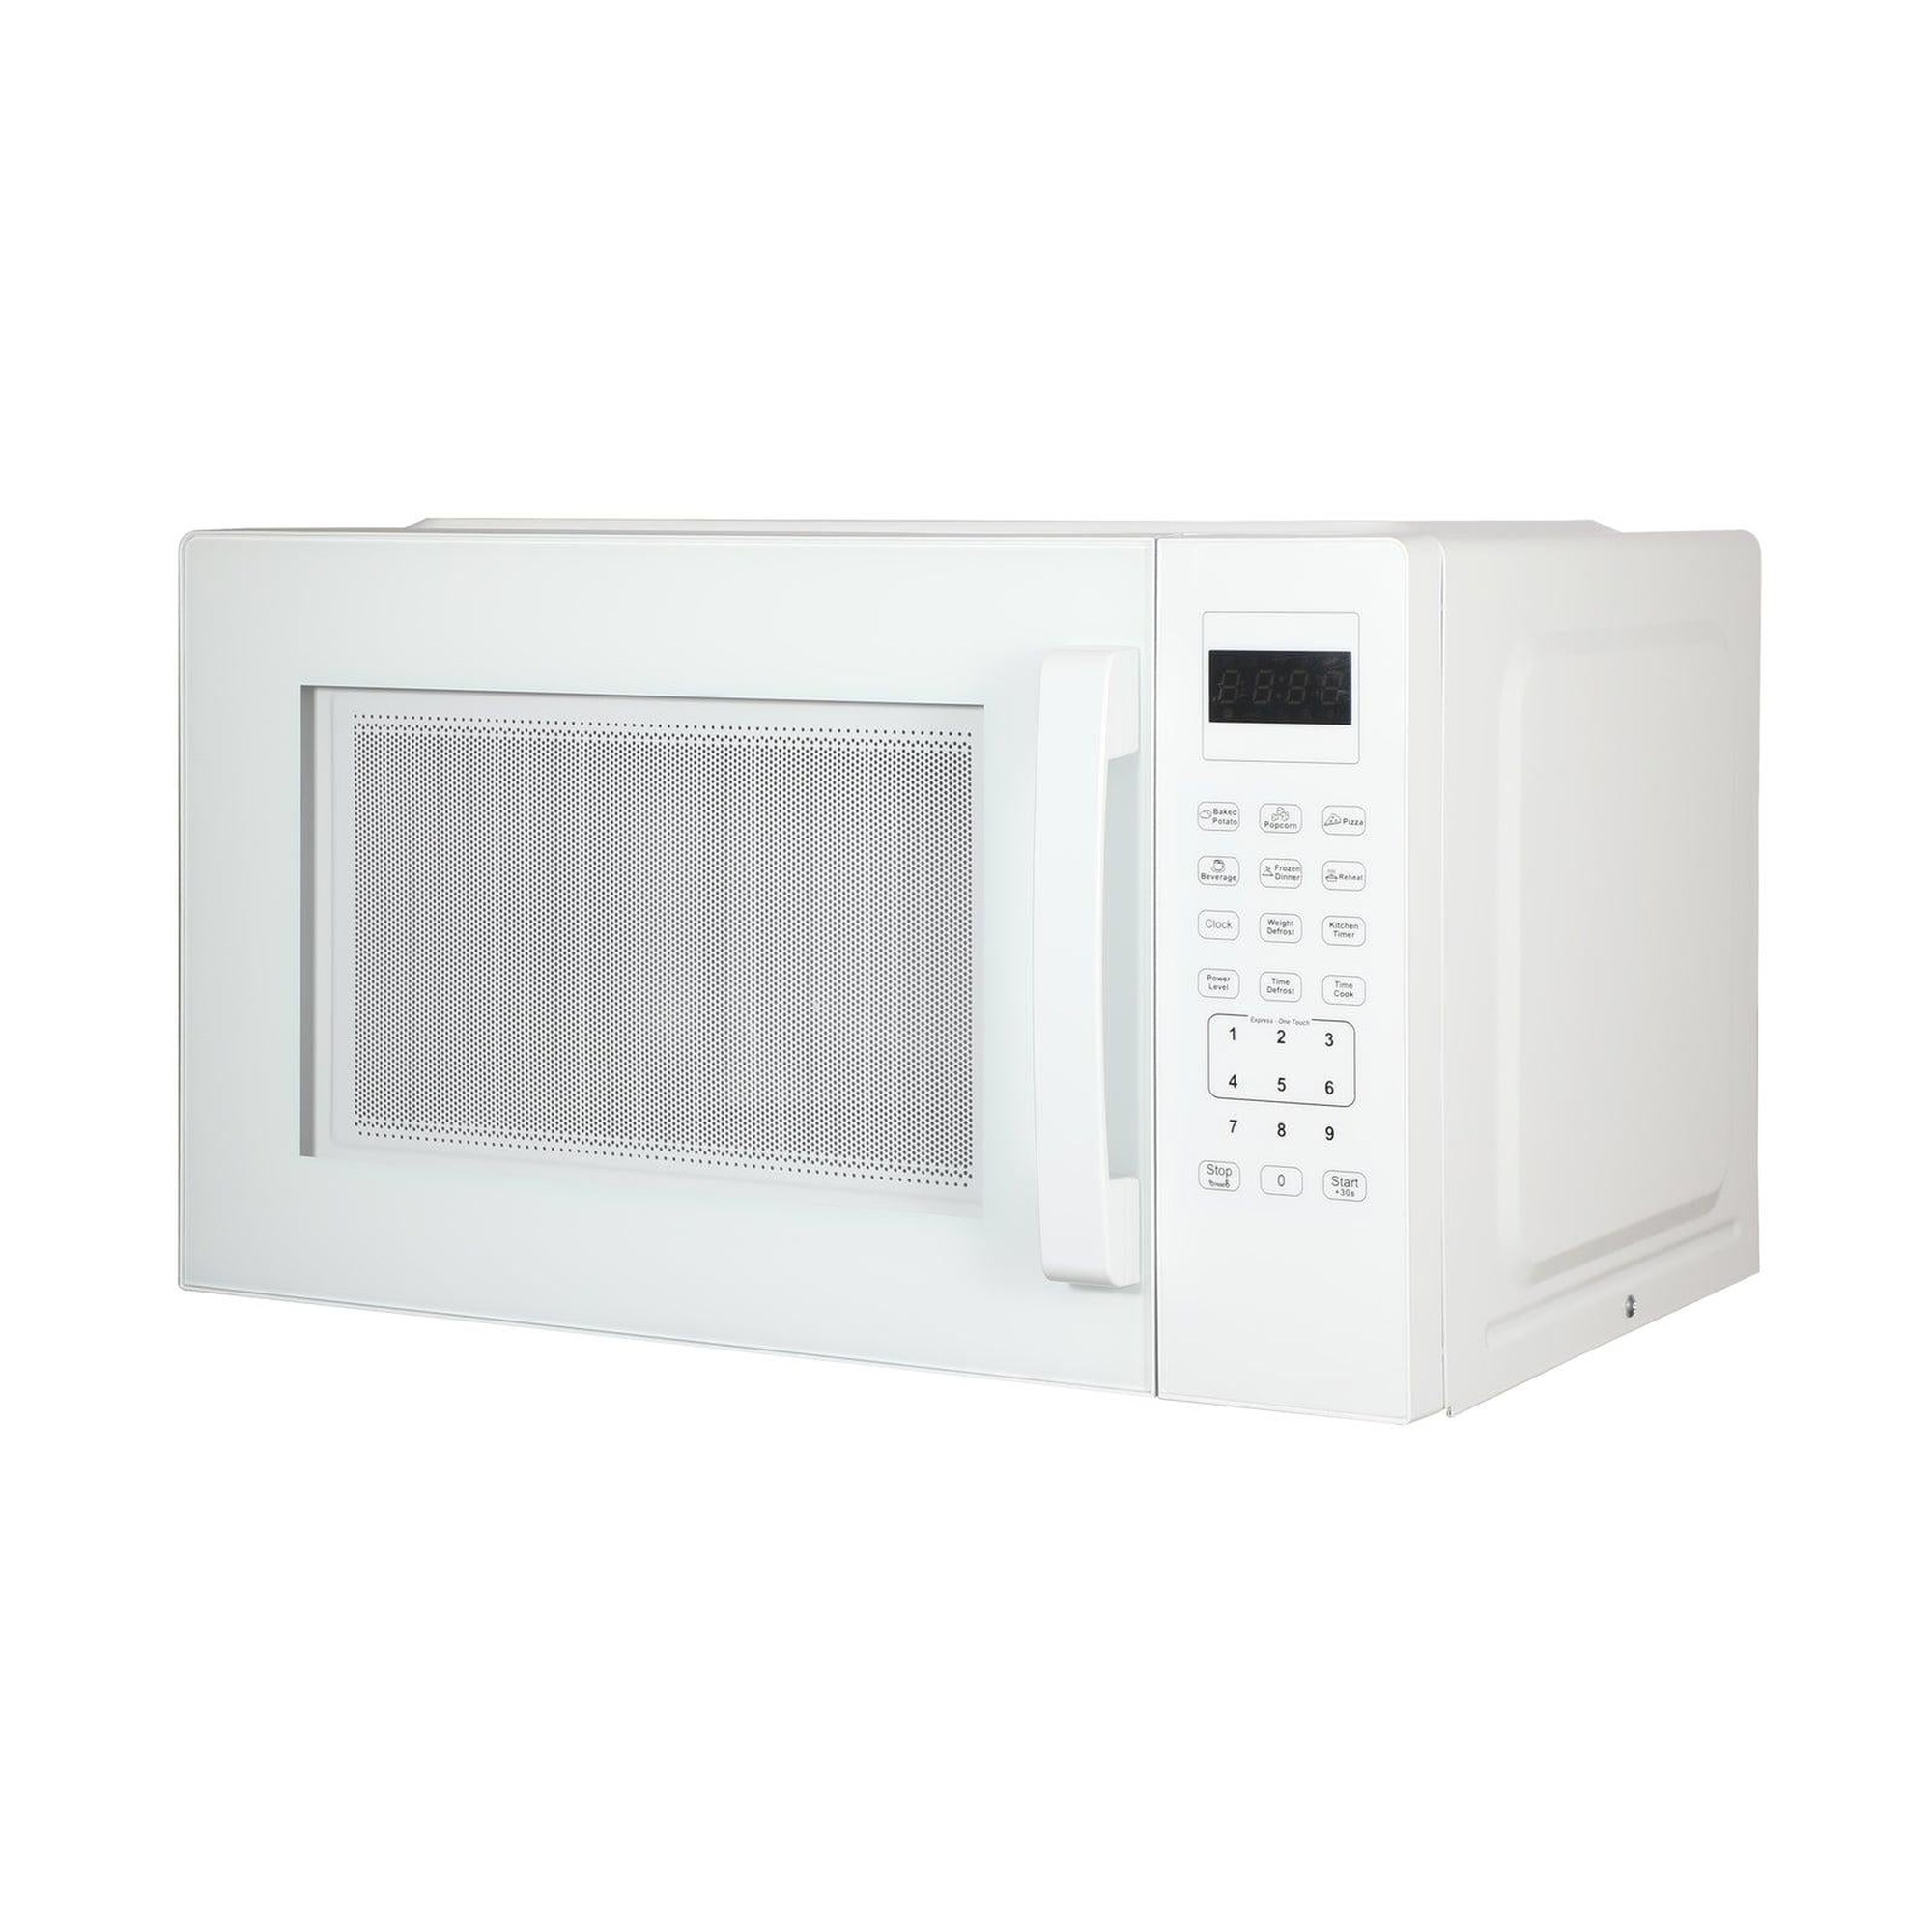 Avanti MO7191TW 0.7 cu. ft. Microwave Oven, Simon's Furniture